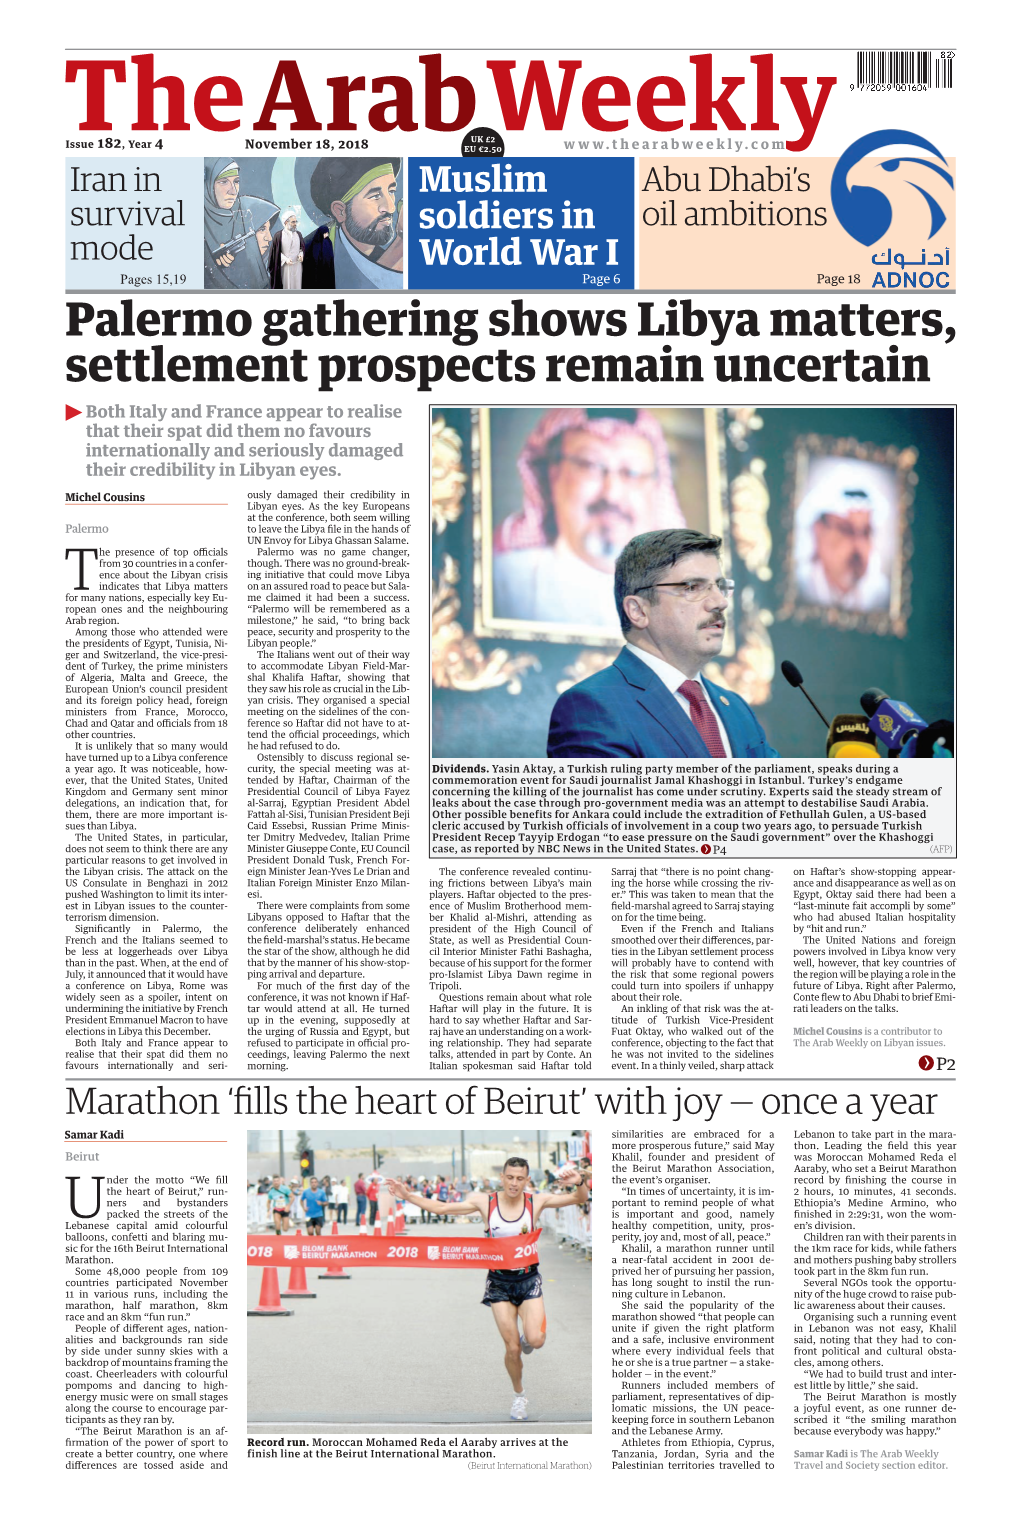 Palermo Gathering Shows Libya Matters, Settlement Prospects